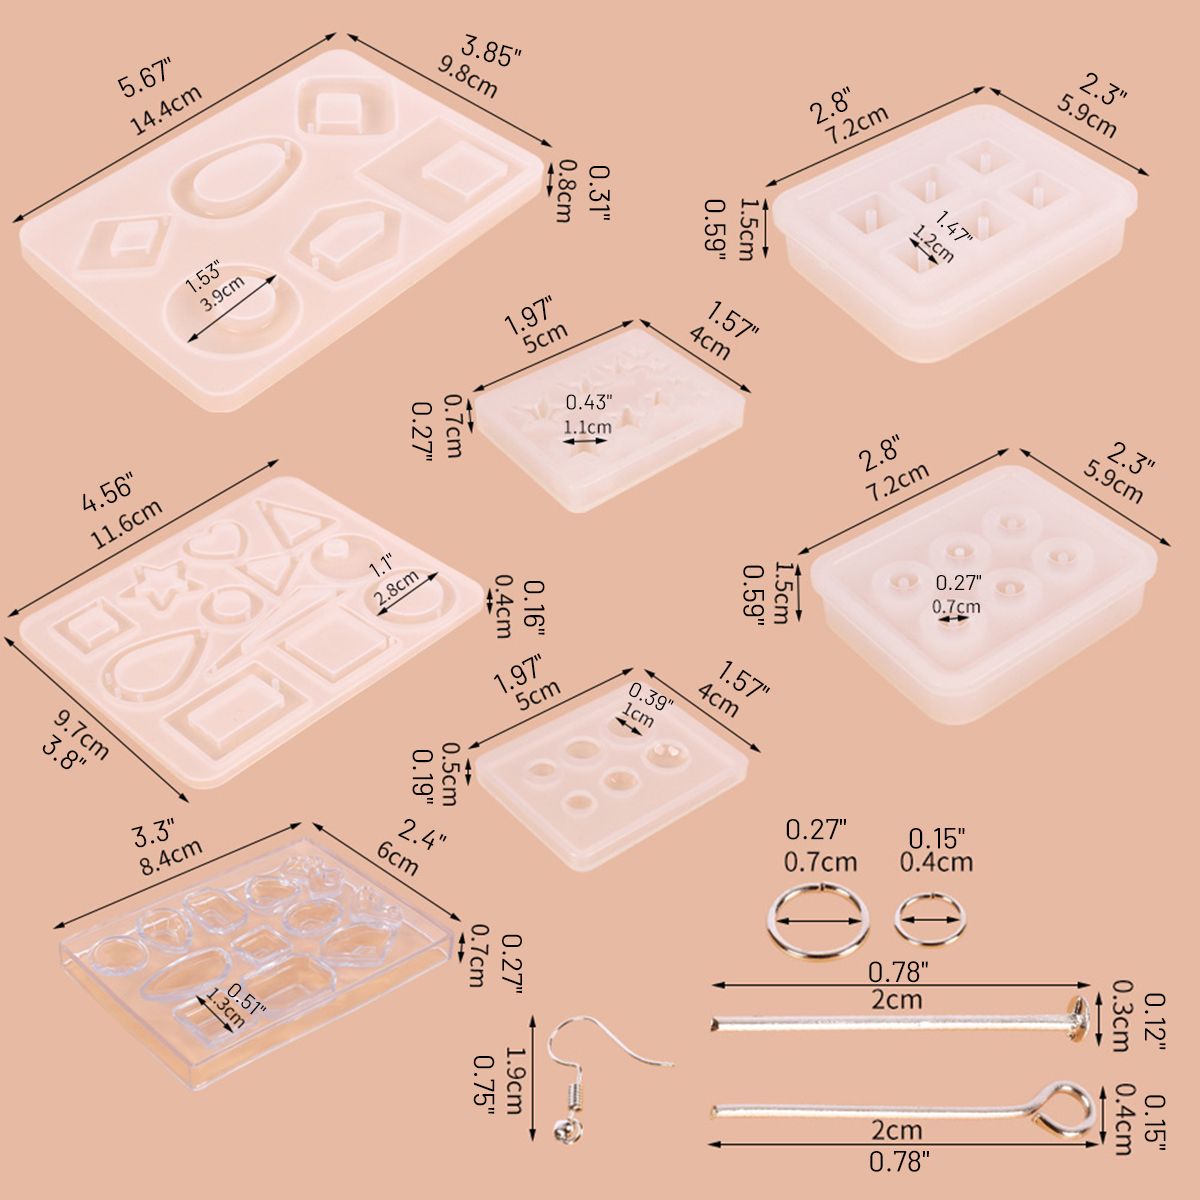 249PCS-Epoxy-Silicone-Resin-Casting-DIY-Molds-Kit-Set-Jewelry-Pendant-Making-Craft-1741173